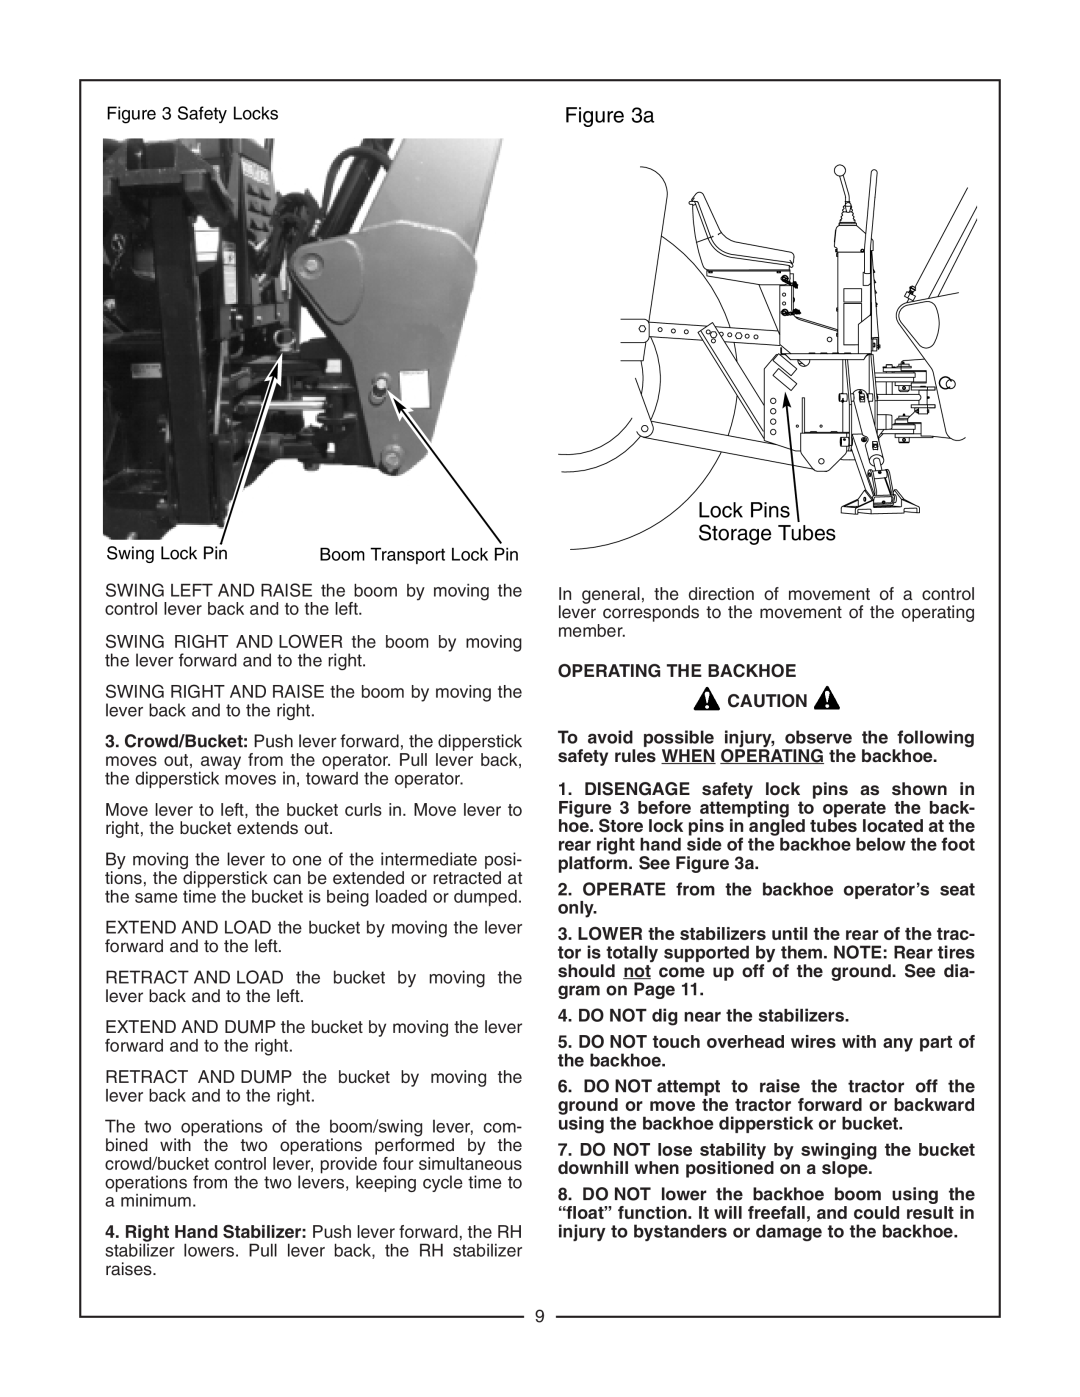 Bush Hog 2165 manual a Lock Pins Storage Tubes, Operating The Backhoe, OPERATE from the backhoe operator’s seat only 